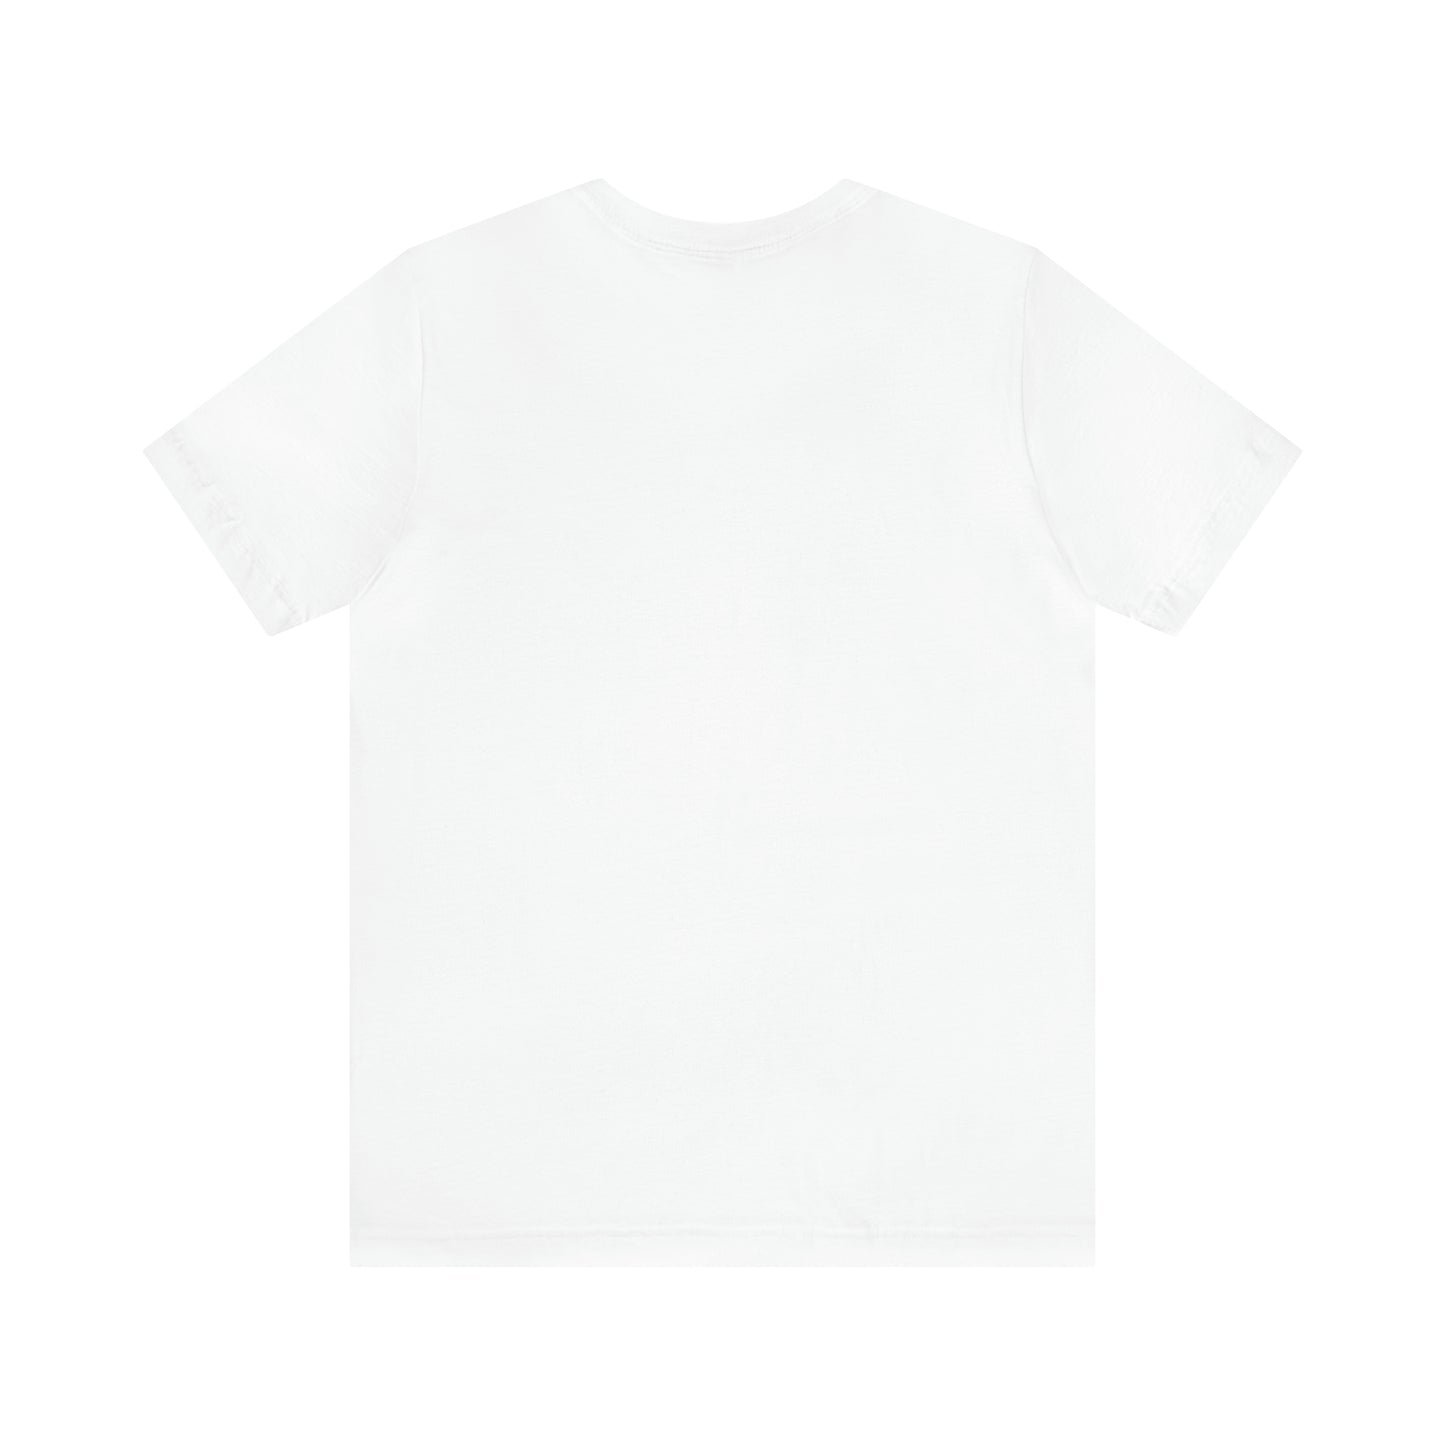 KAPTUR Unisex T-Shirt